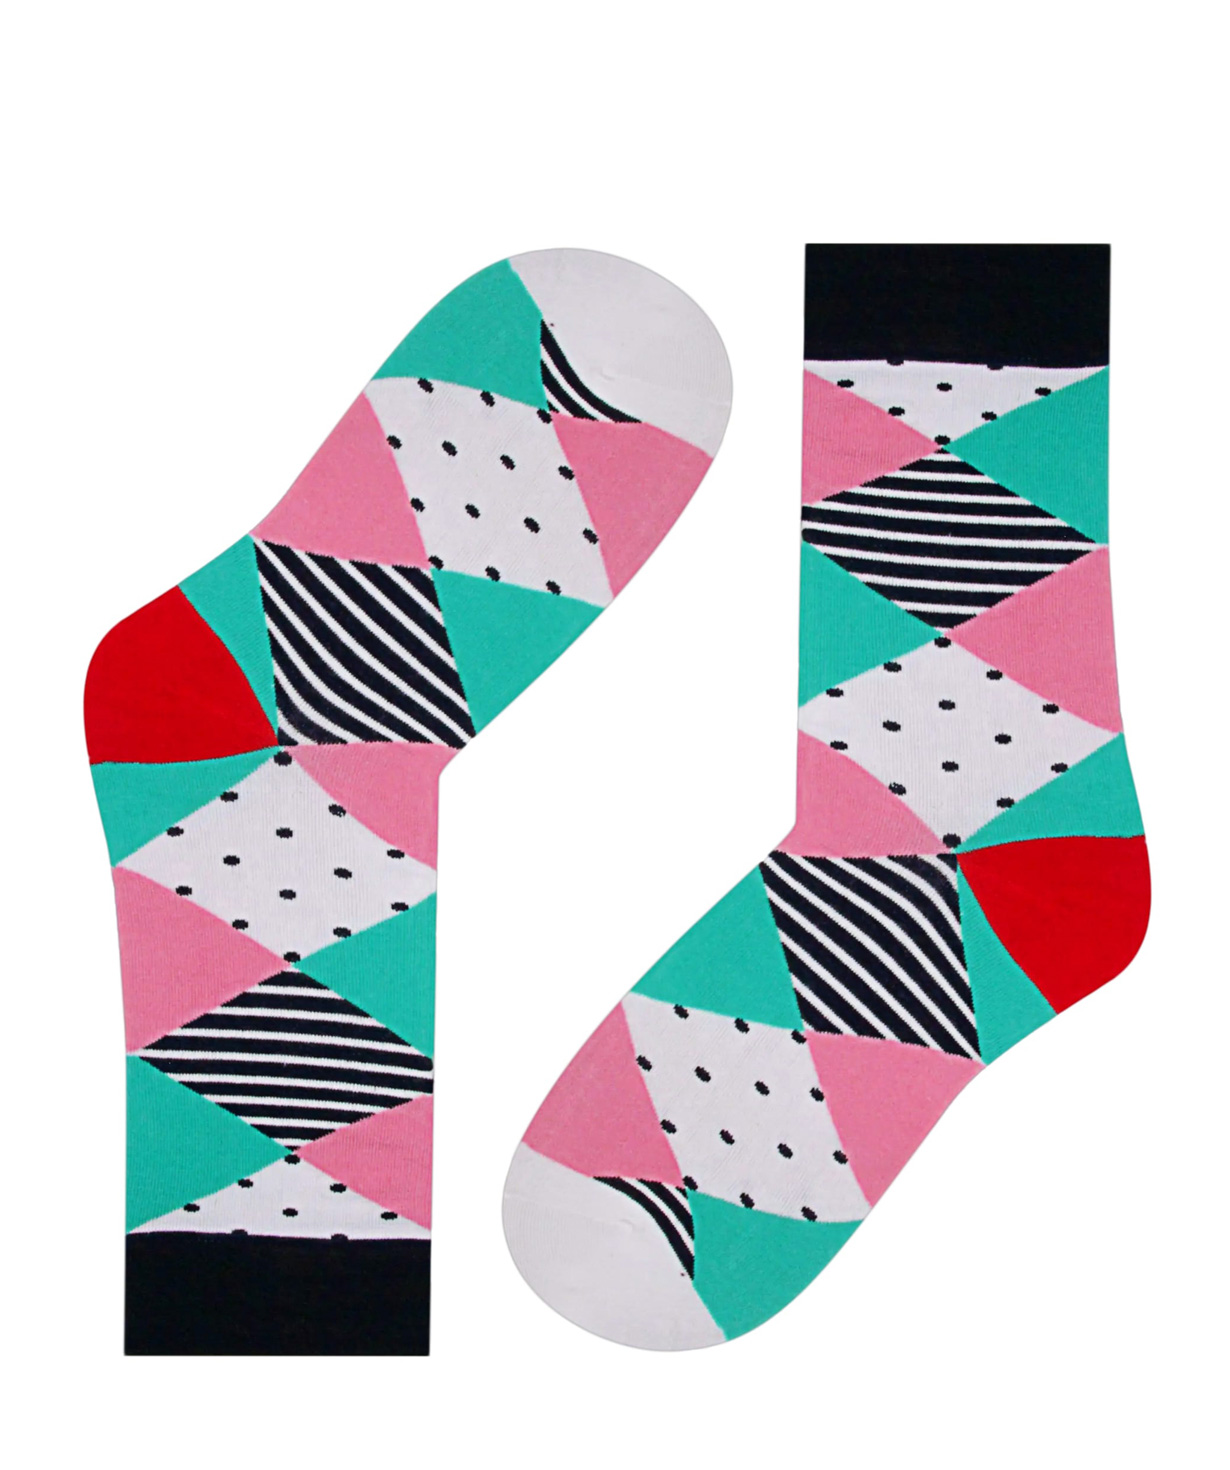 Socks `Zeal Socks` with patterns